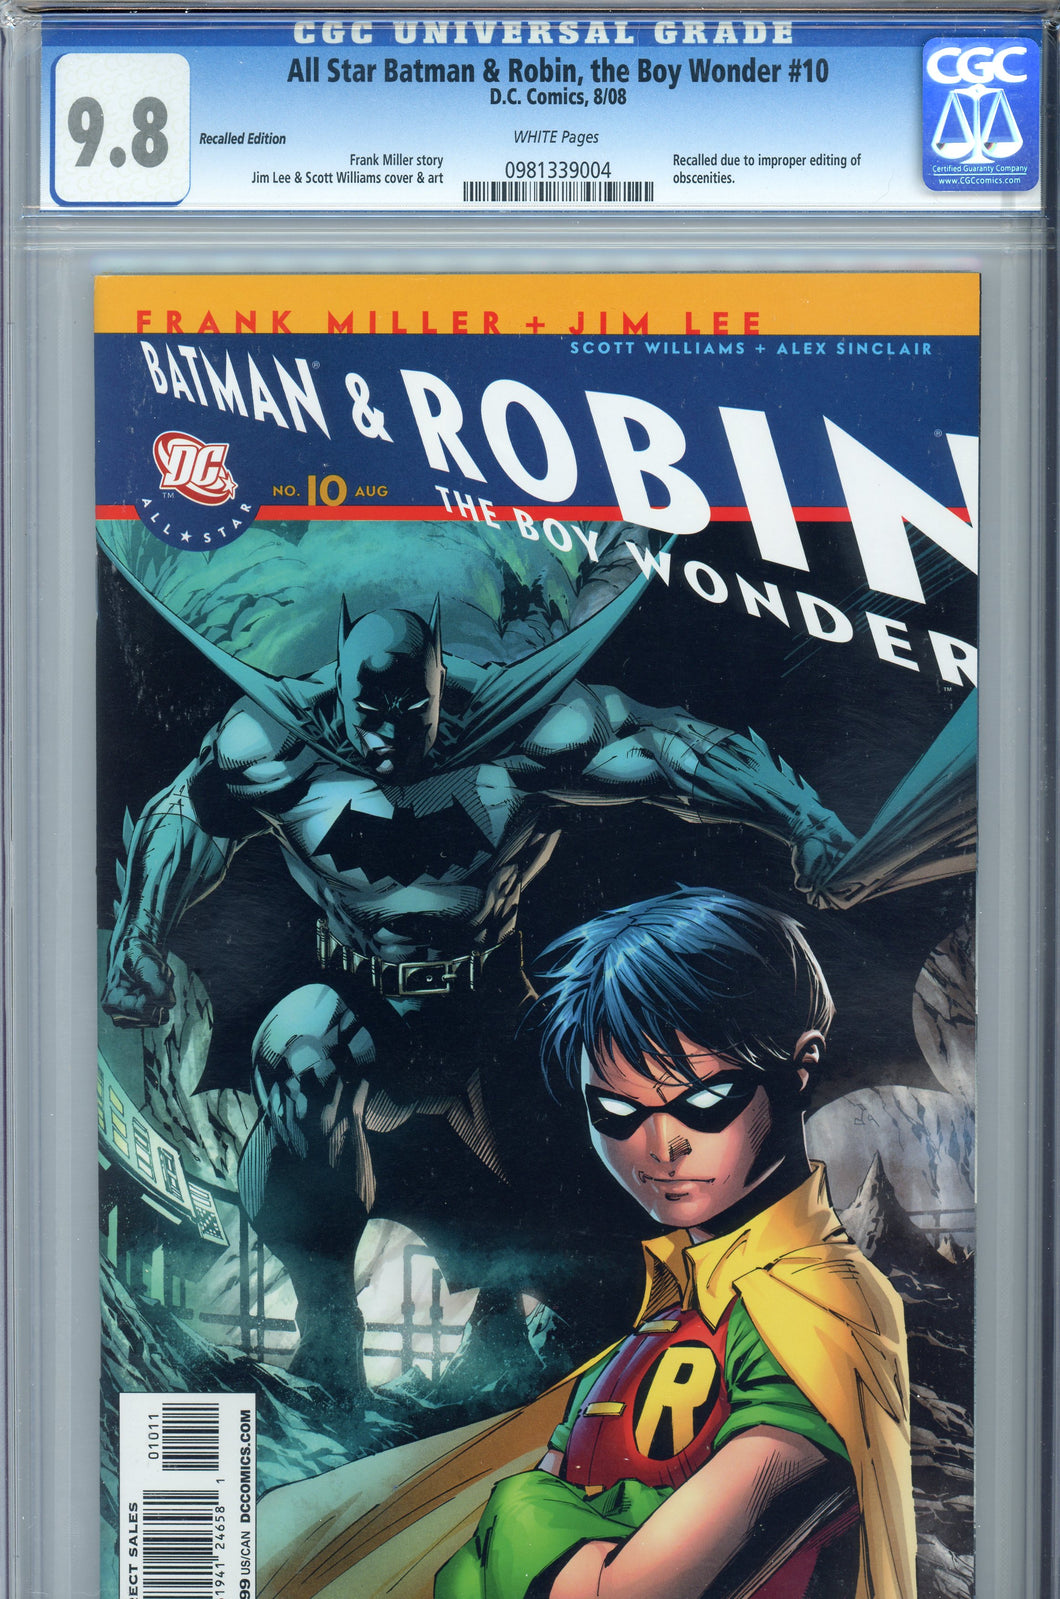 All Star Batman & Robin #10 CGC 9.8 Recalled Edition